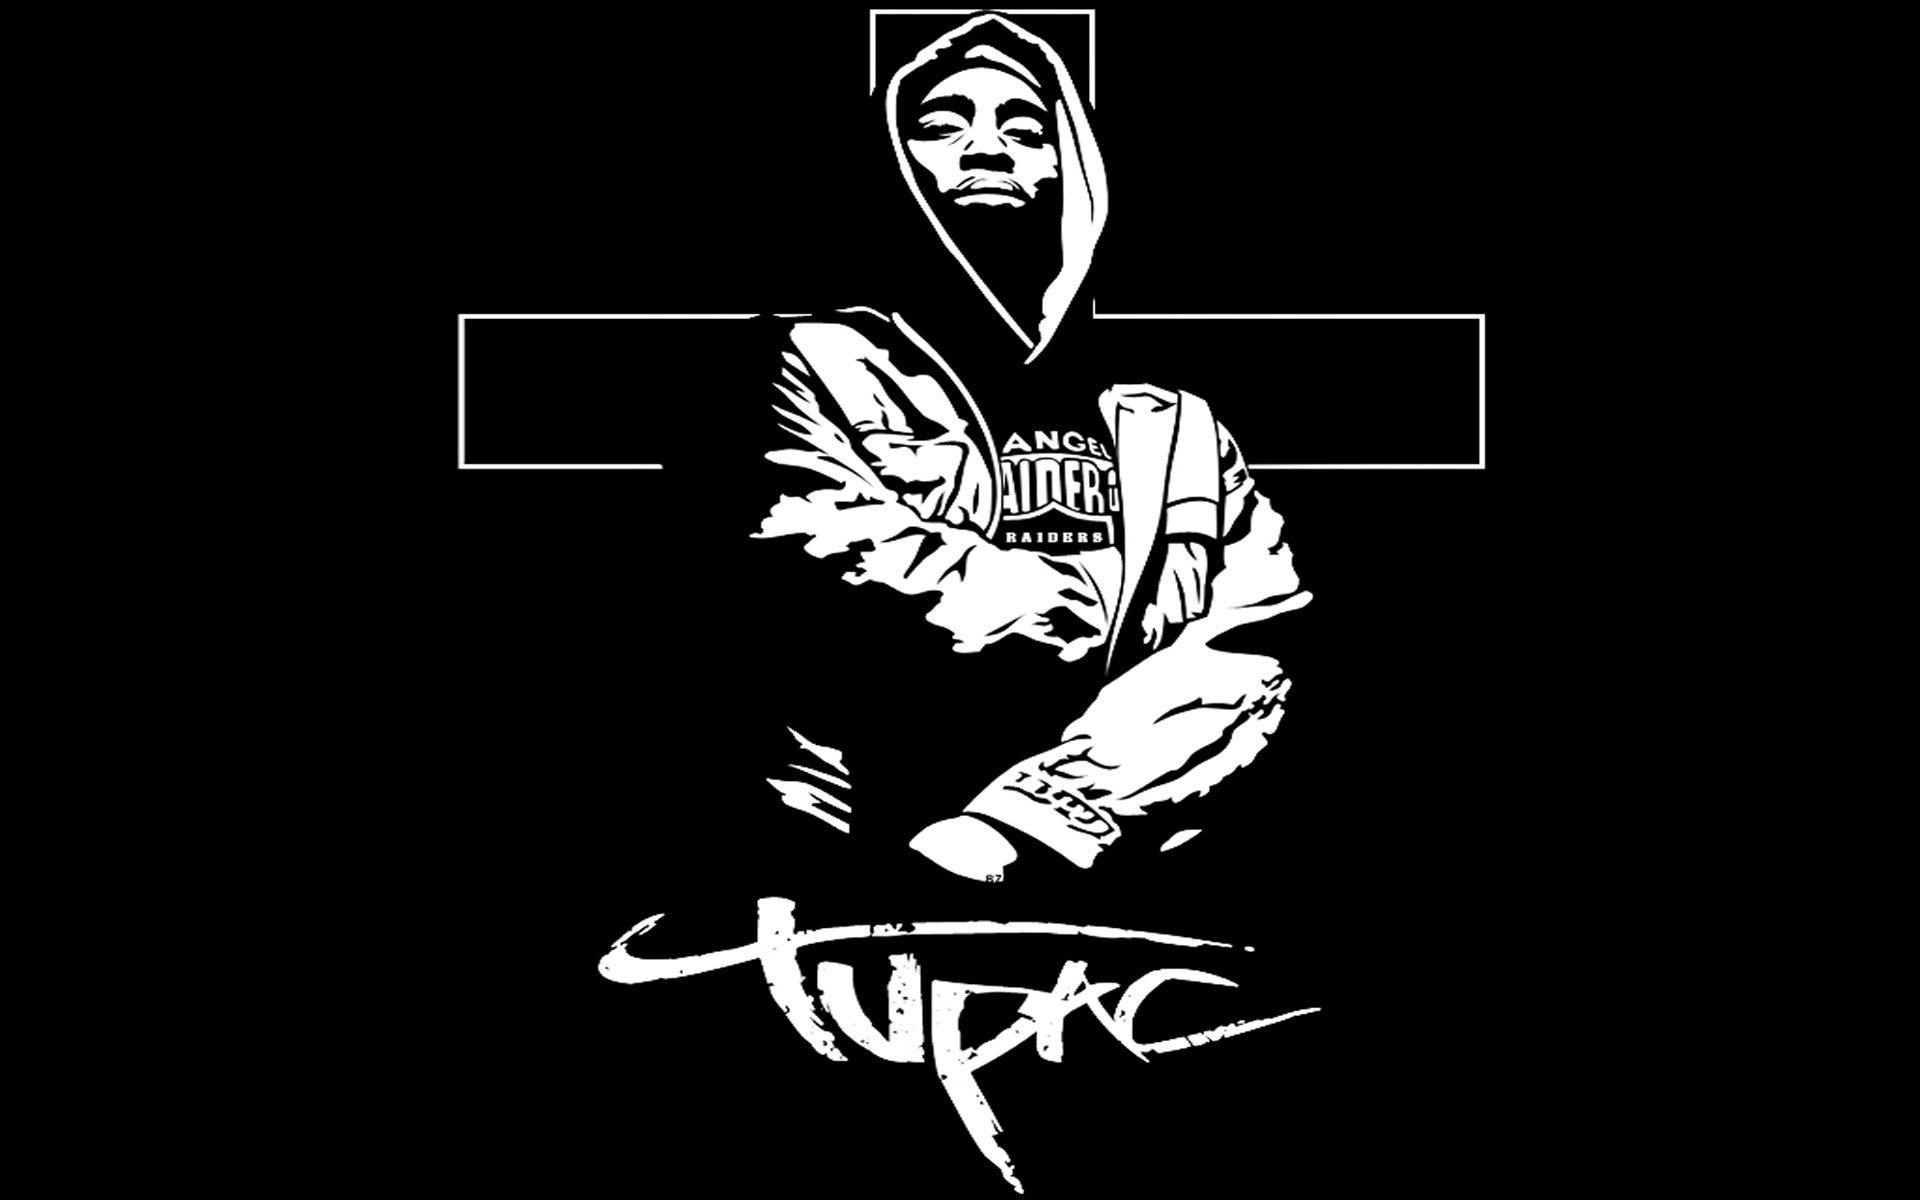  Hip Hop 2pac singers Tupac Shakur rapper artist wallpaper background